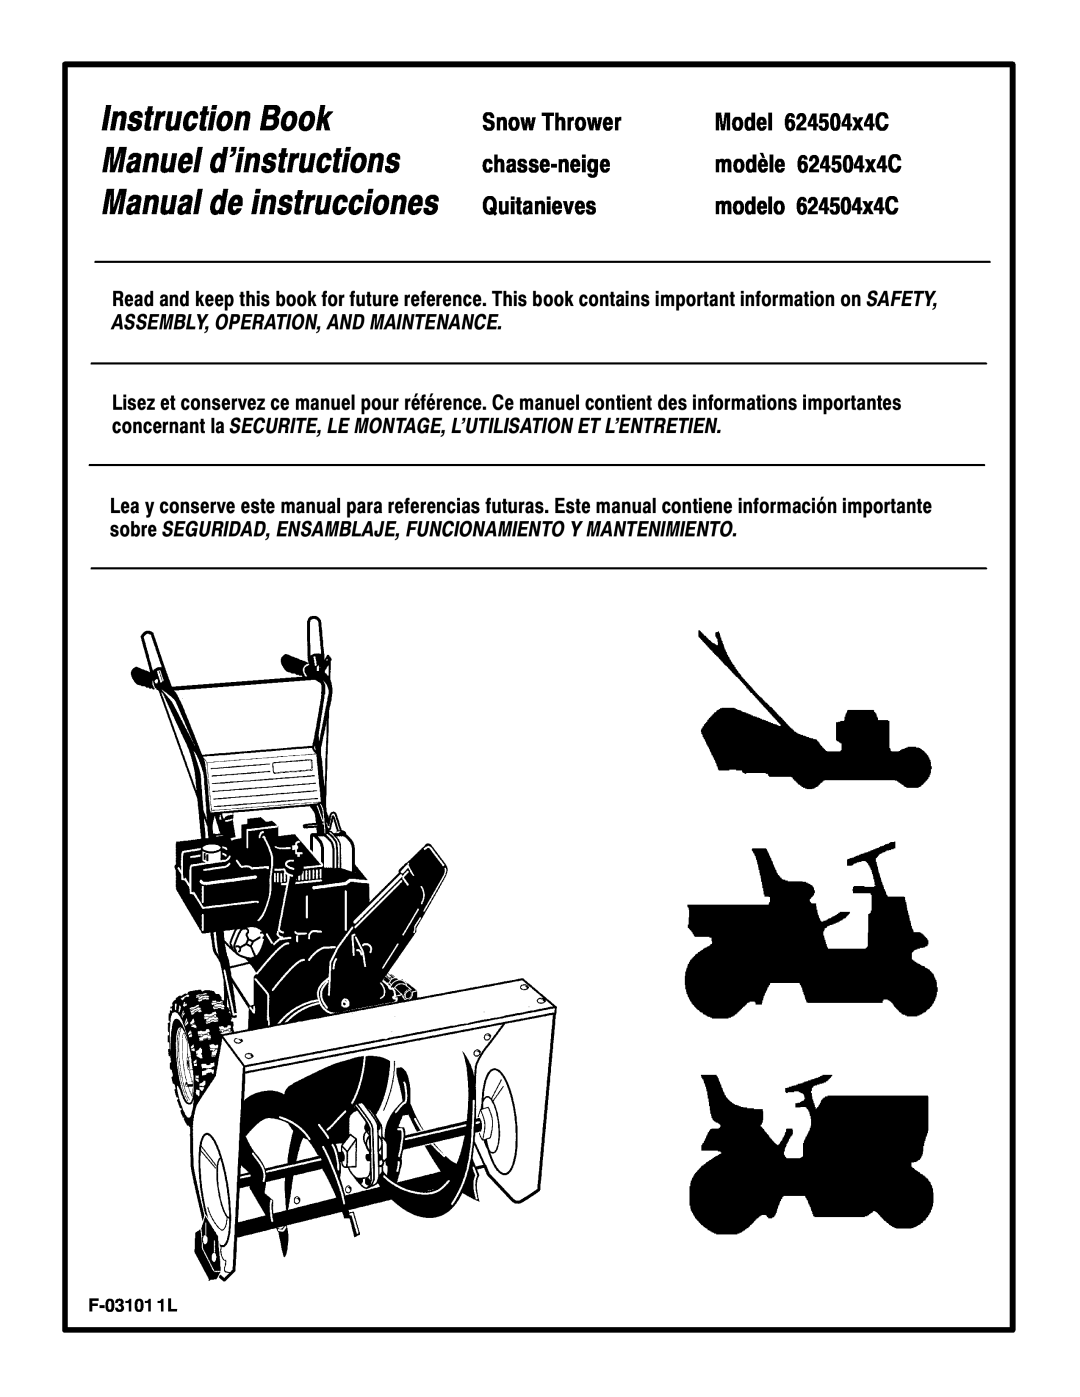 Murray manual Model 624504x4C, Instruction Book Manuel d’instructions Manual de instrucciones, Snow Thrower, modèle 